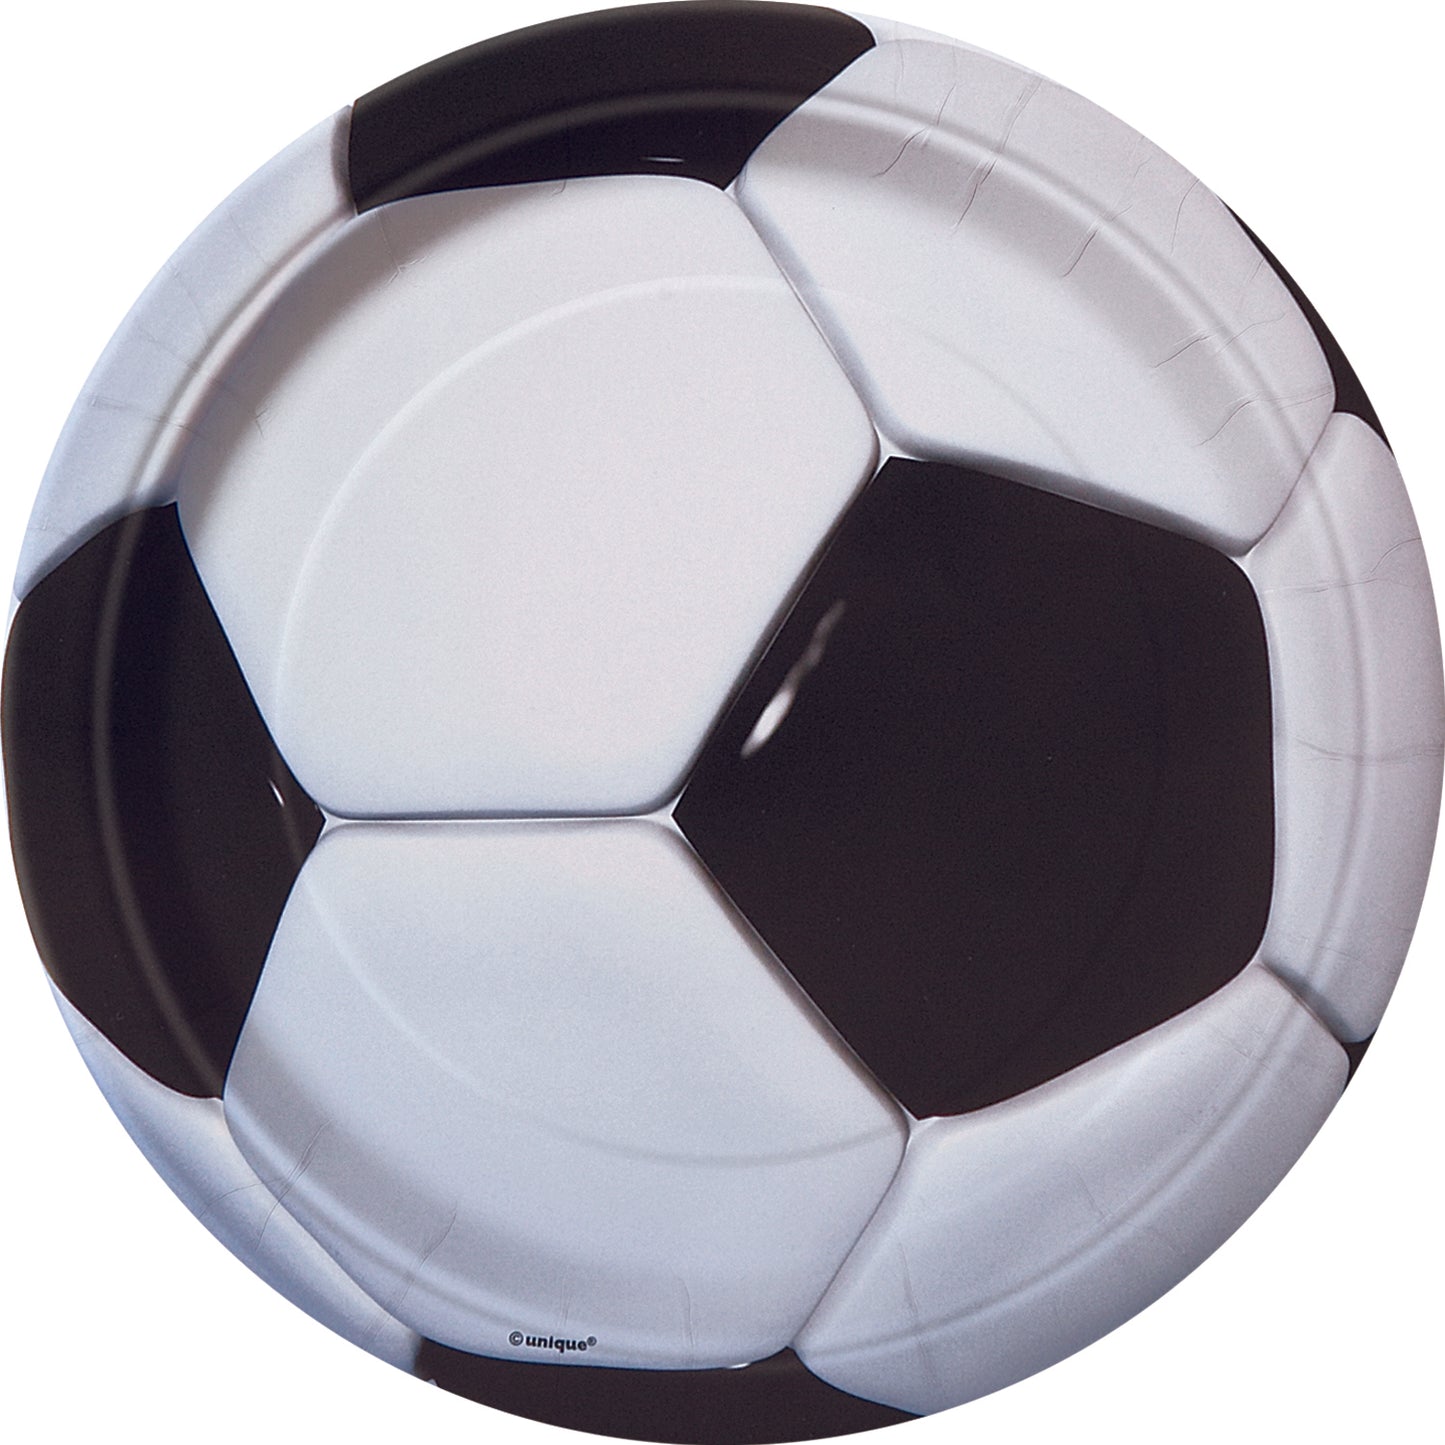 8pcs 3D Soccer 9" Plates